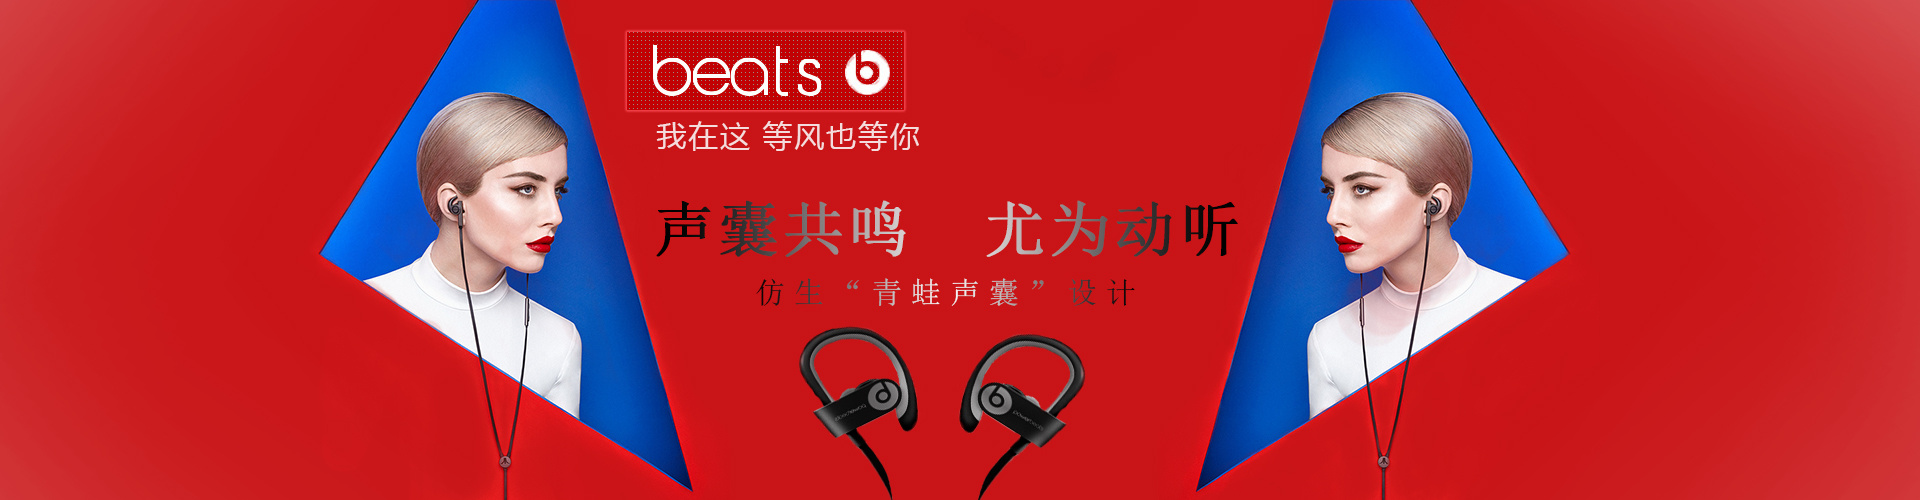 beats耳机banner